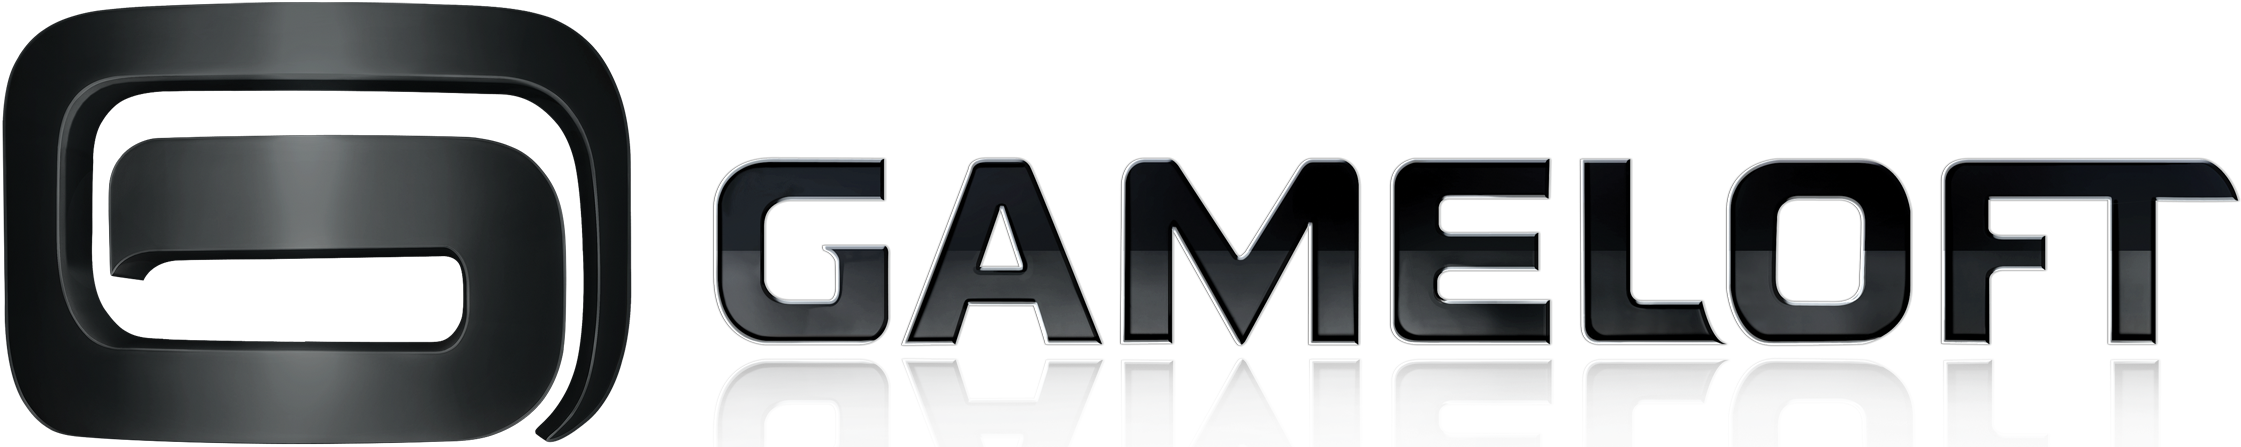 Gameloft-logo-and-wordmark